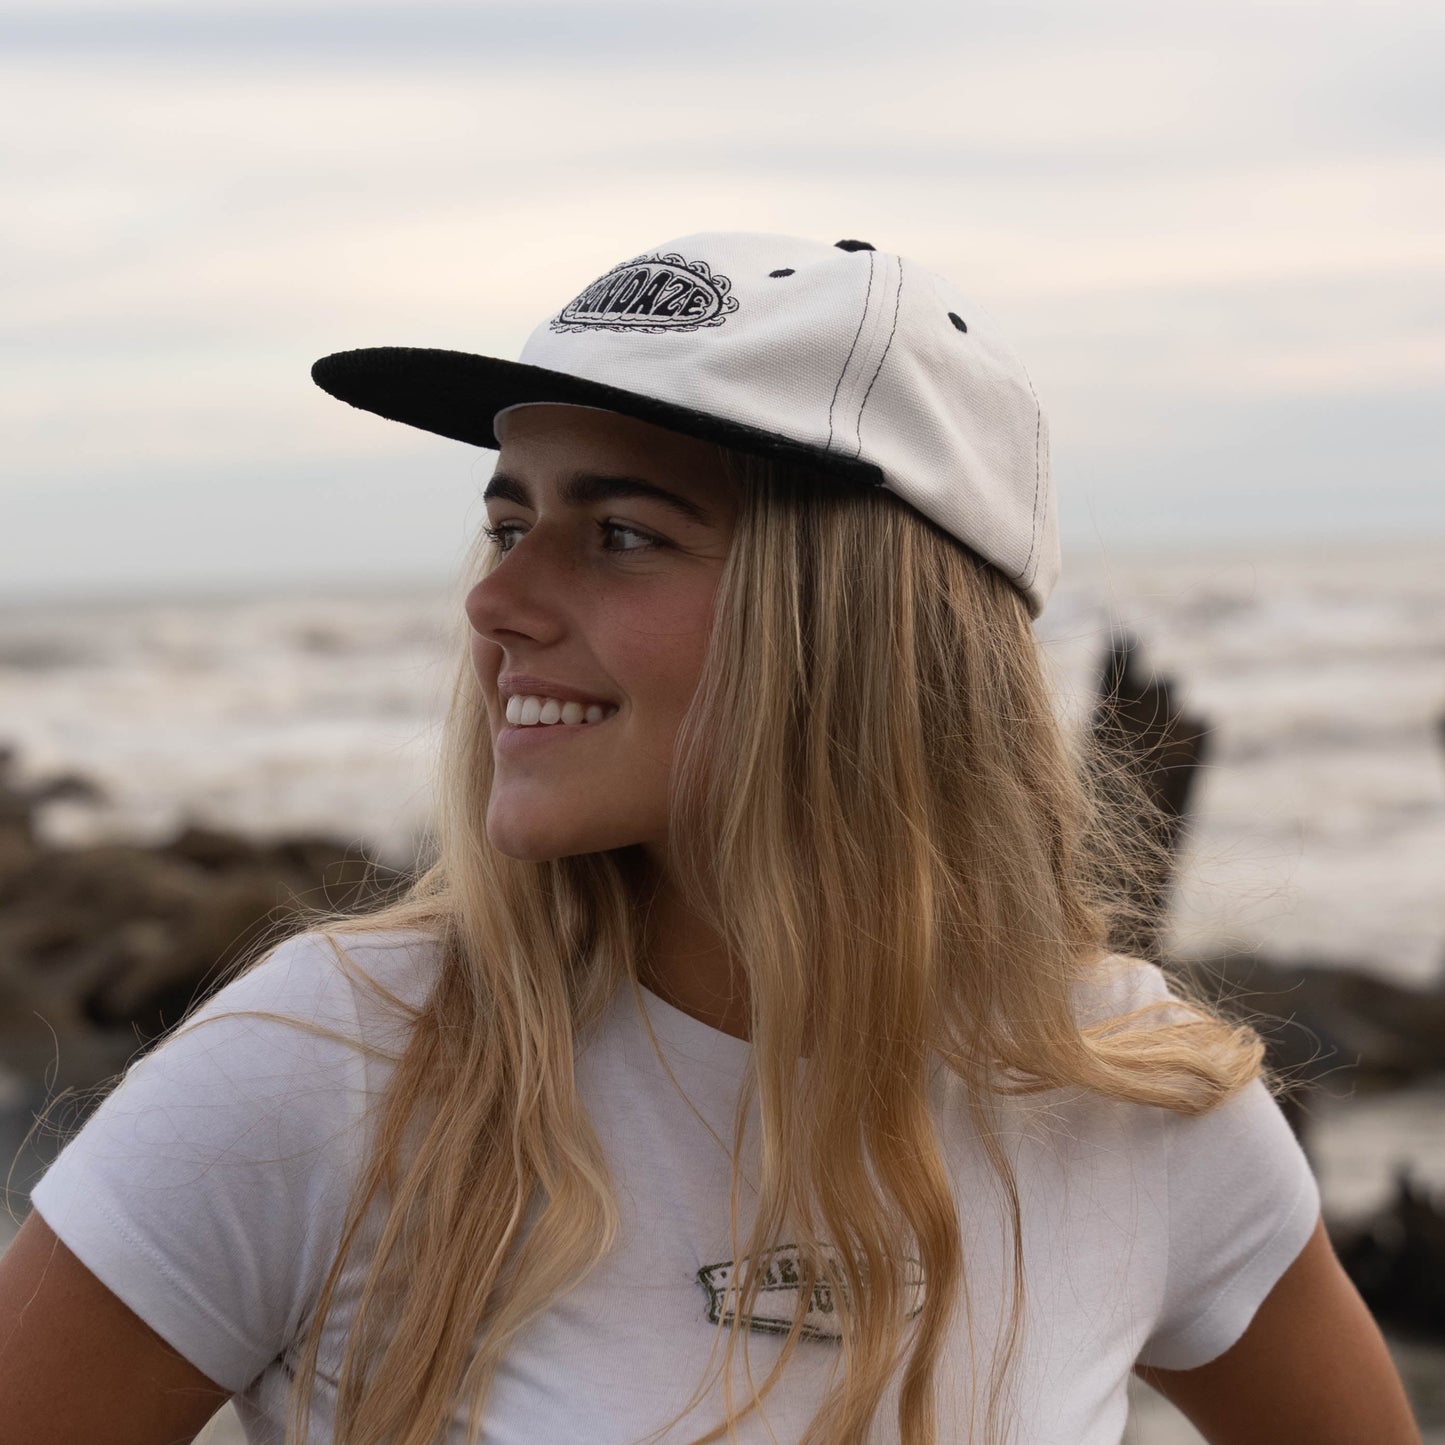 Surfer Girl wearing black and white corduroy hat from Sundaze